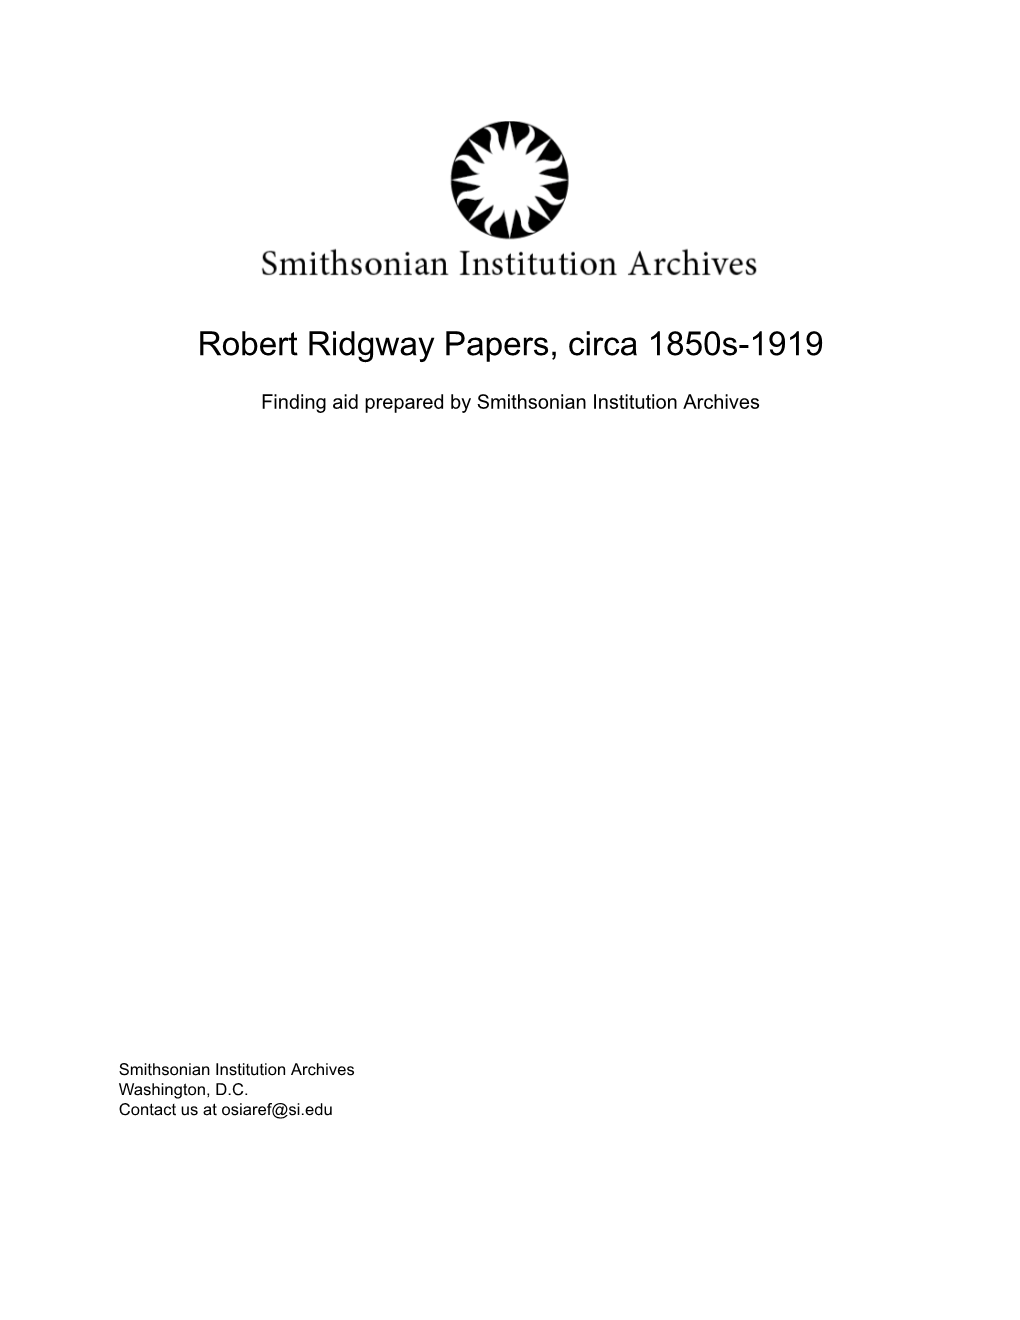 Robert Ridgway Papers, Circa 1850S-1919